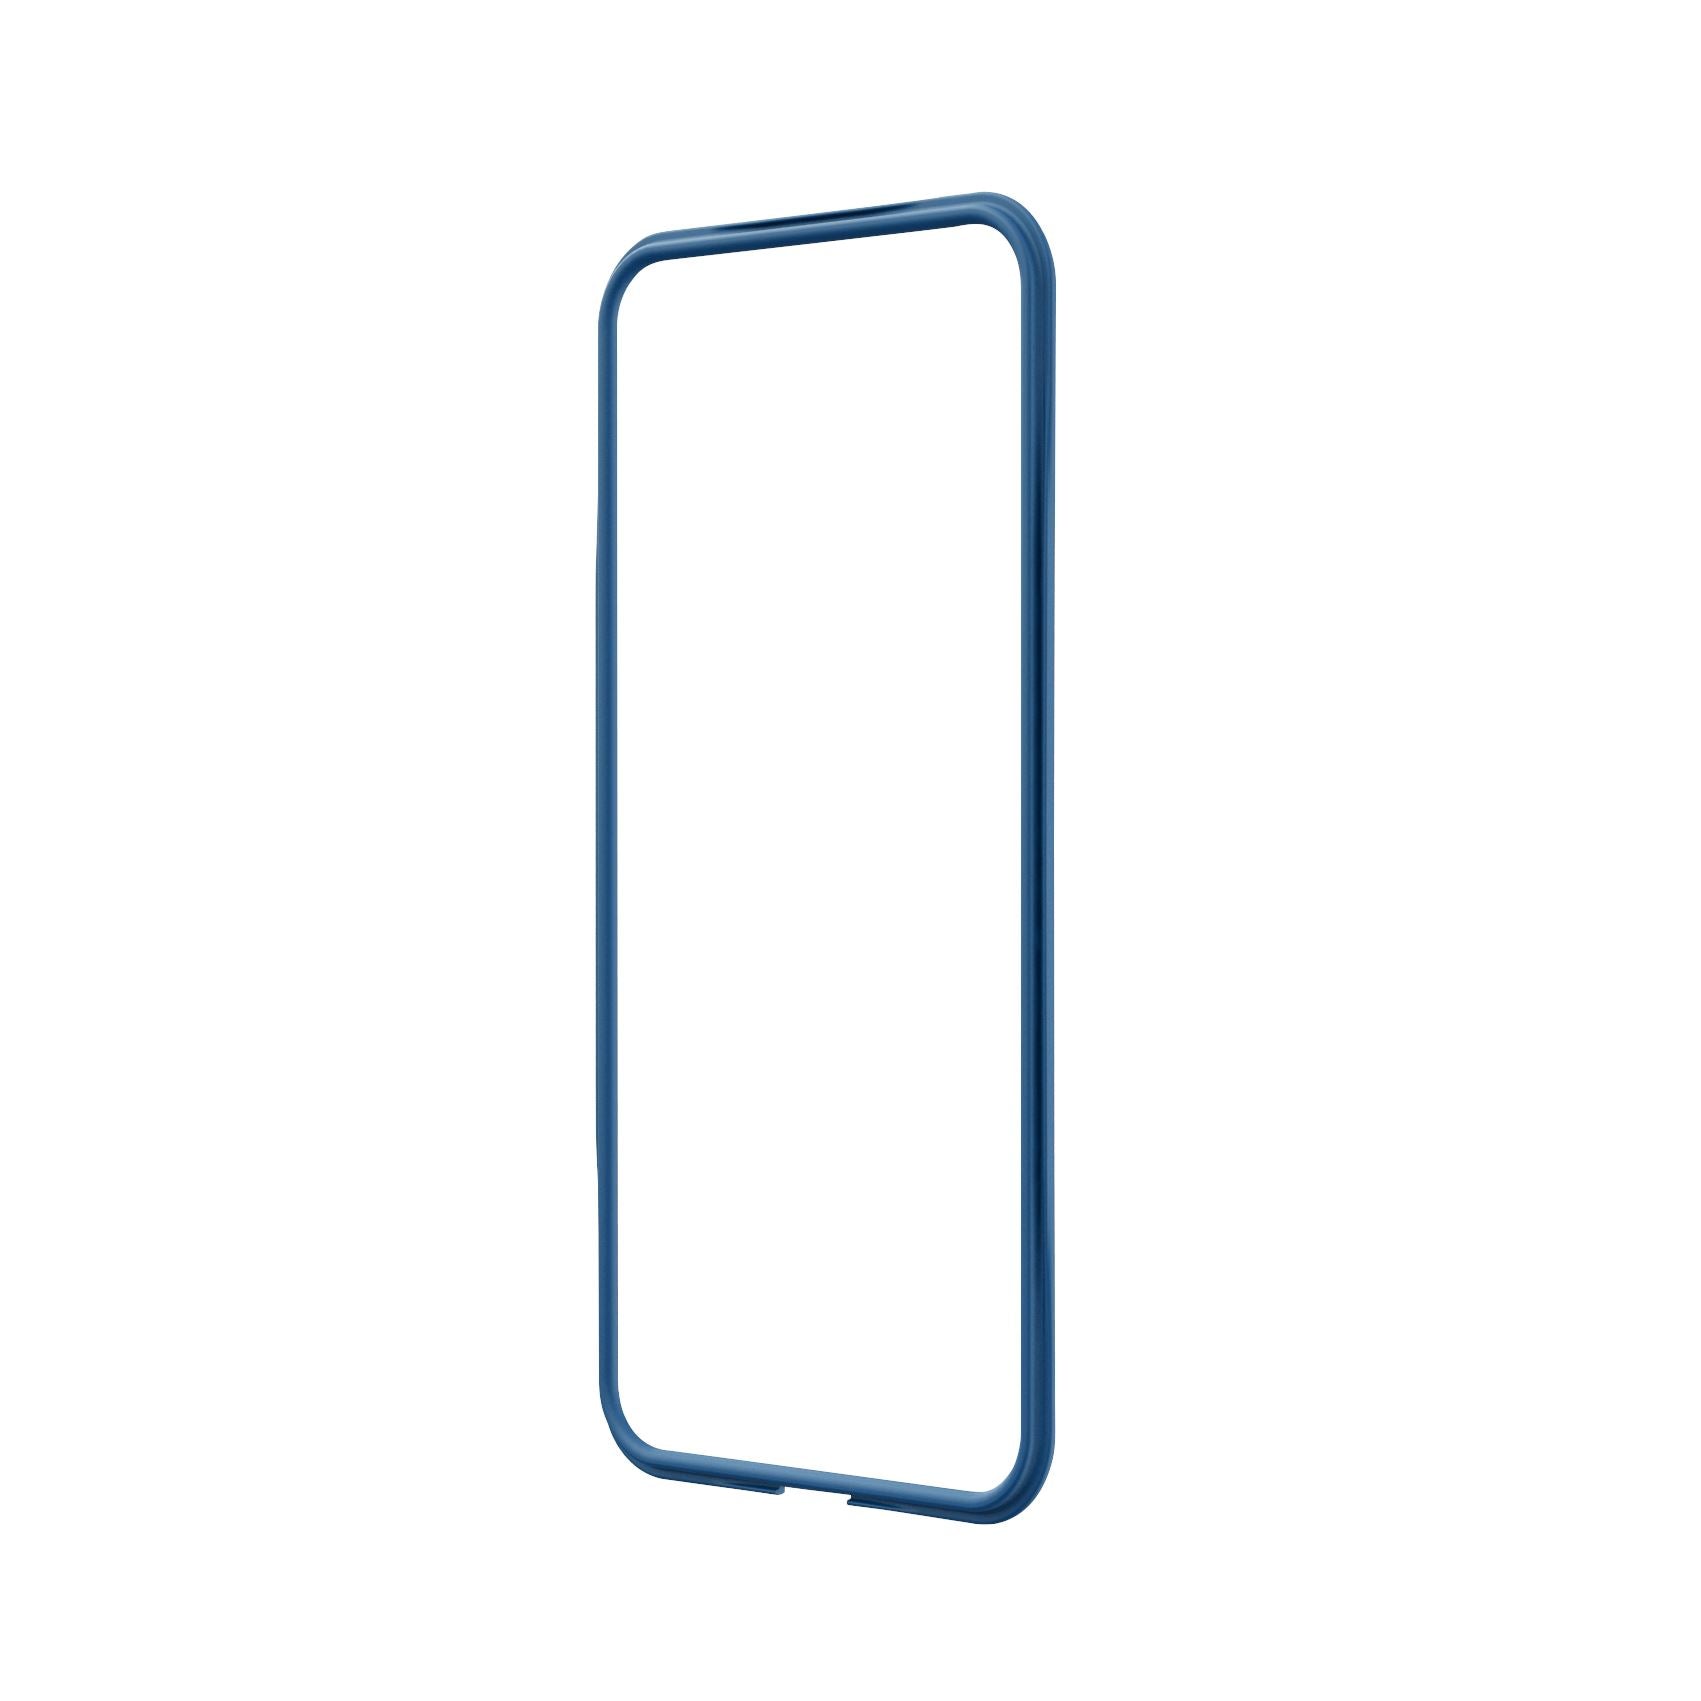 RhinoShield Mod NX Modular Case for iPhone 12 Series (2020) iPhone 12 Series RhinoShield iPhone 12/12 Pro 6.1" Royal Blue (Rim) 